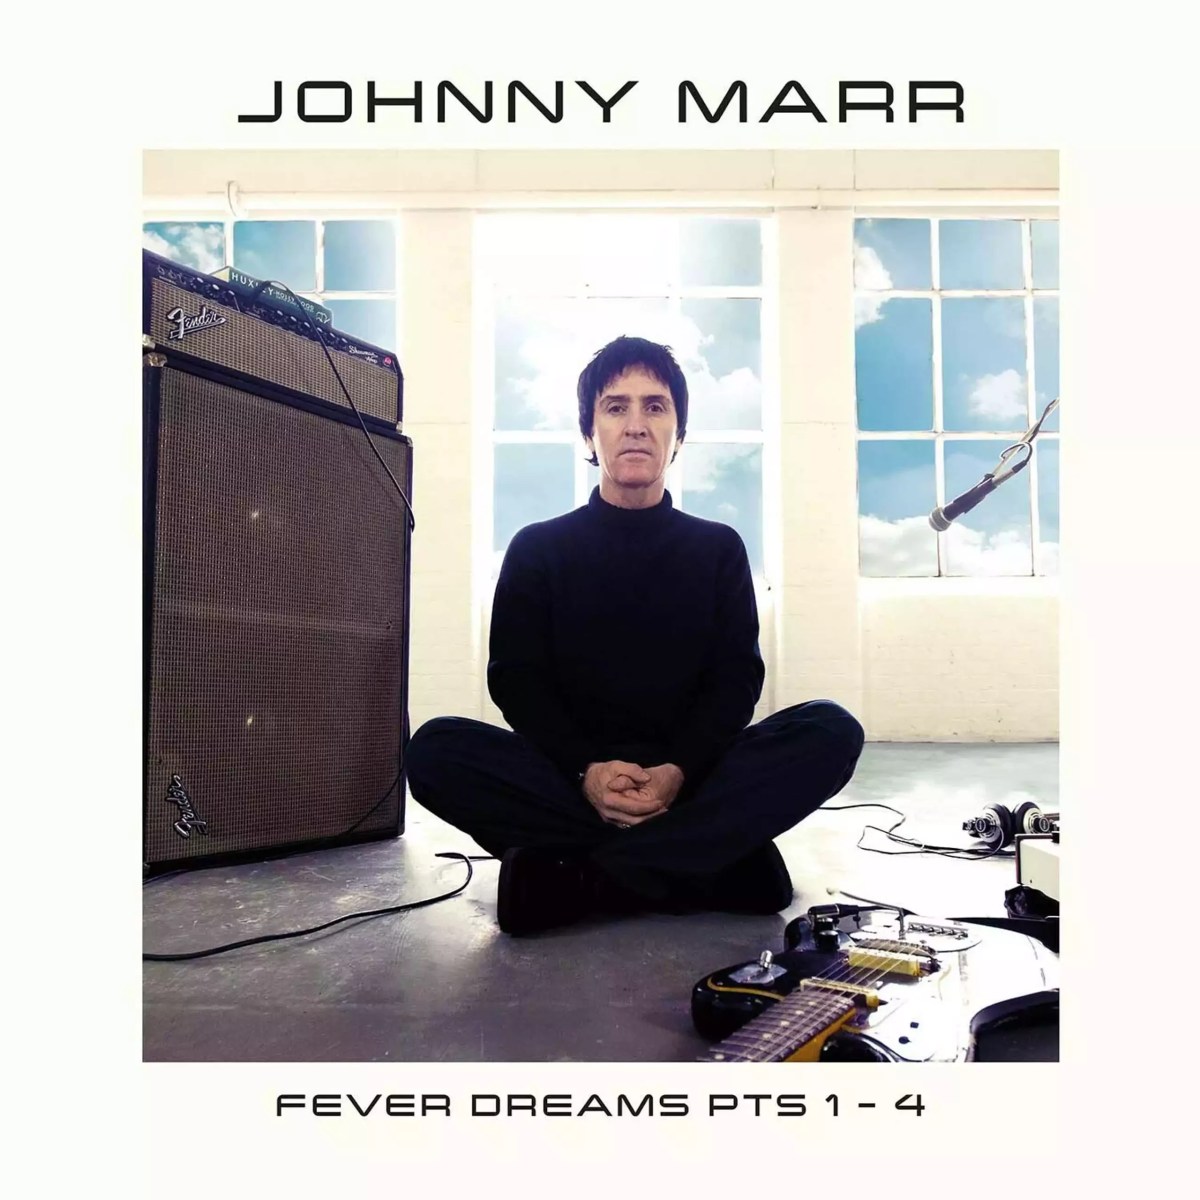 Johnny Marr – Fever Dreams Pts 1-4 (BMG)